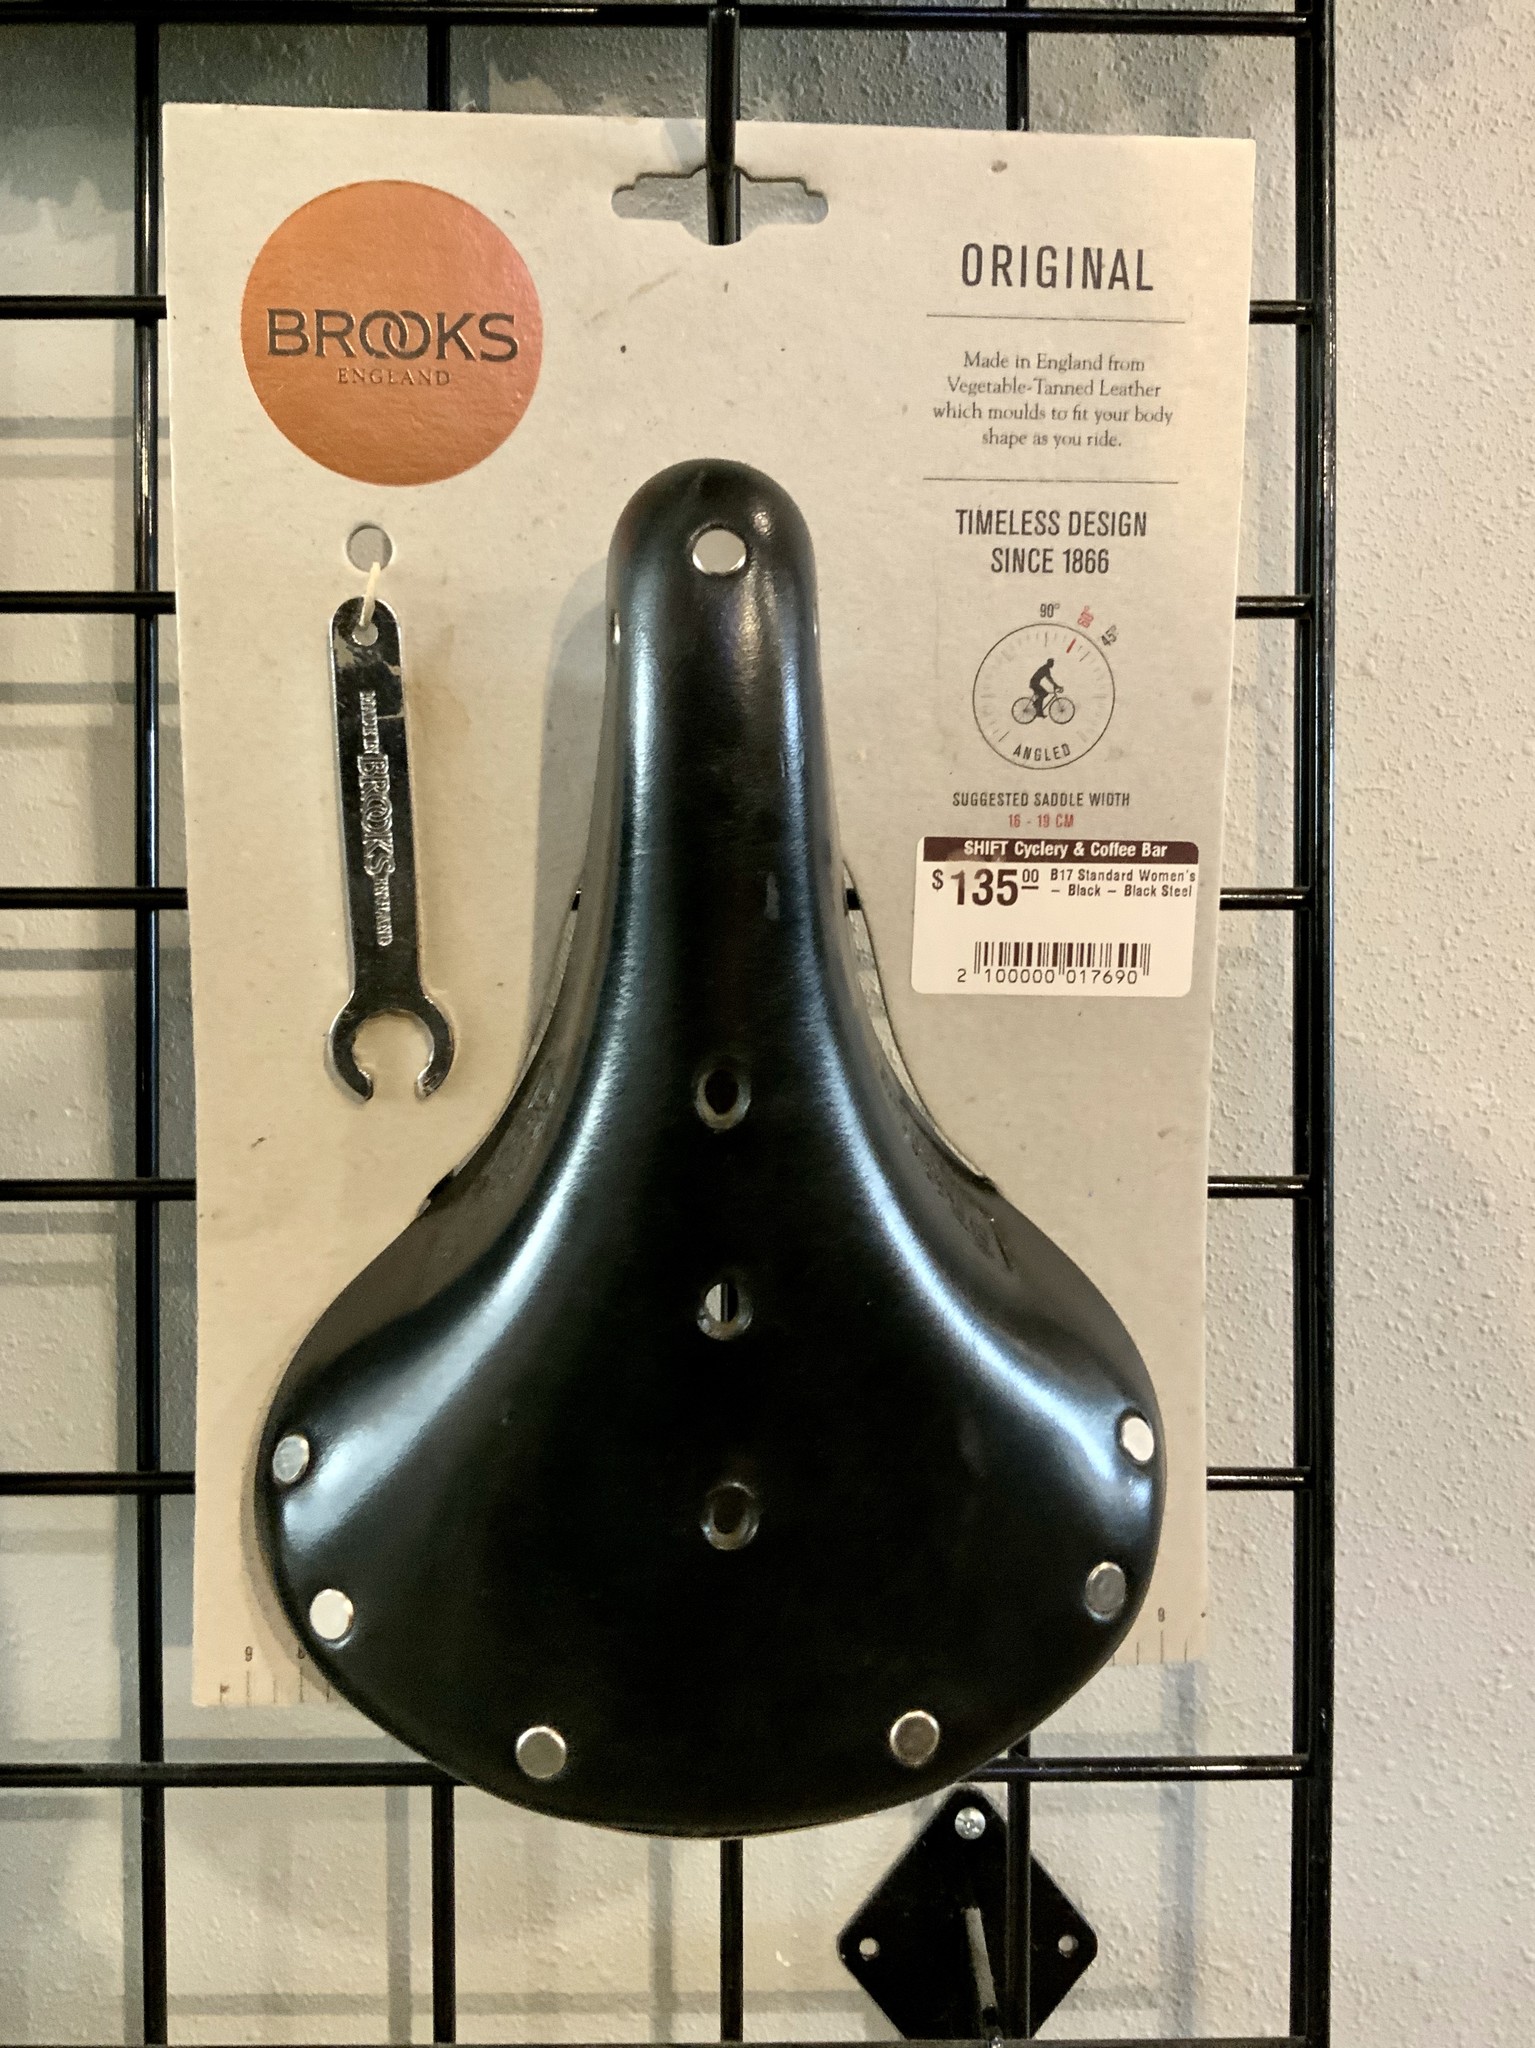 Brooks B17 Standard Women's Saddle